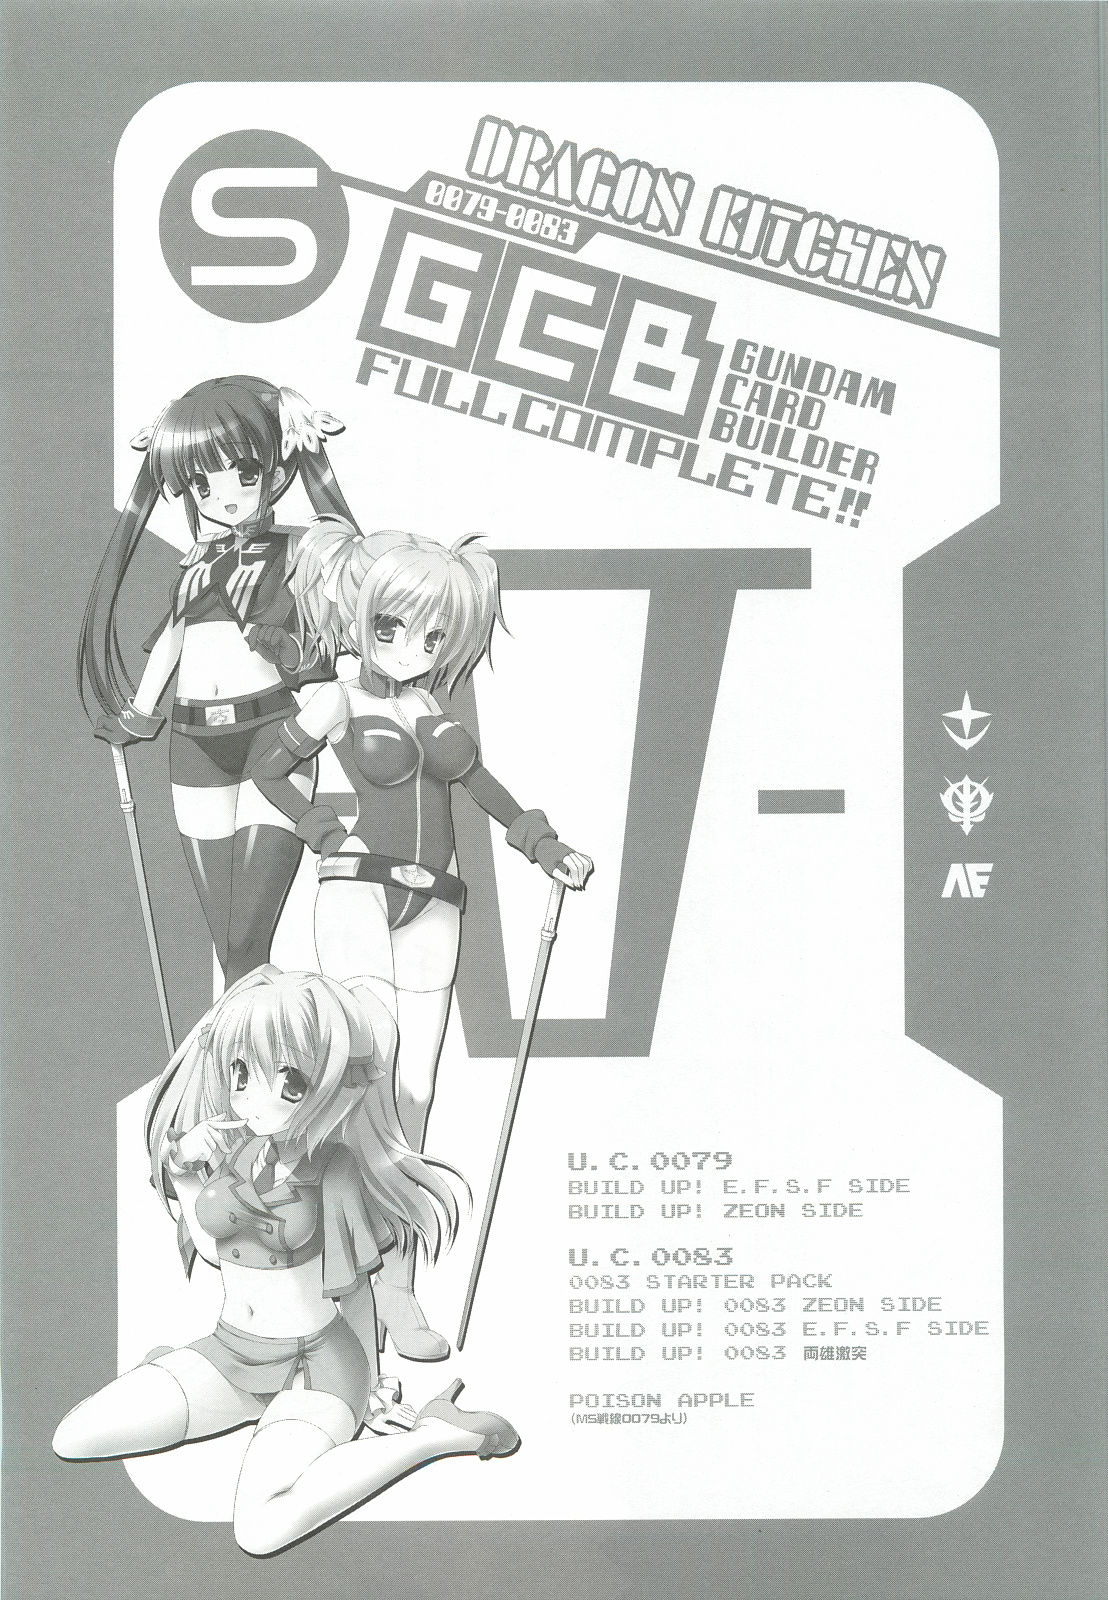 (C82) [Dragon Kitchen (Sasorigatame)] 0079-0083 GCB GUNDAM CARD BUILDER FULL COMPLETE!! (Gundam Card Builder) (C82) [Dragon Kitchen (さそりがため)] 0079-0083 GCB GUNDAM CARD BUILDER FULL COMPLETE!! (ガンダムカードビルダー)